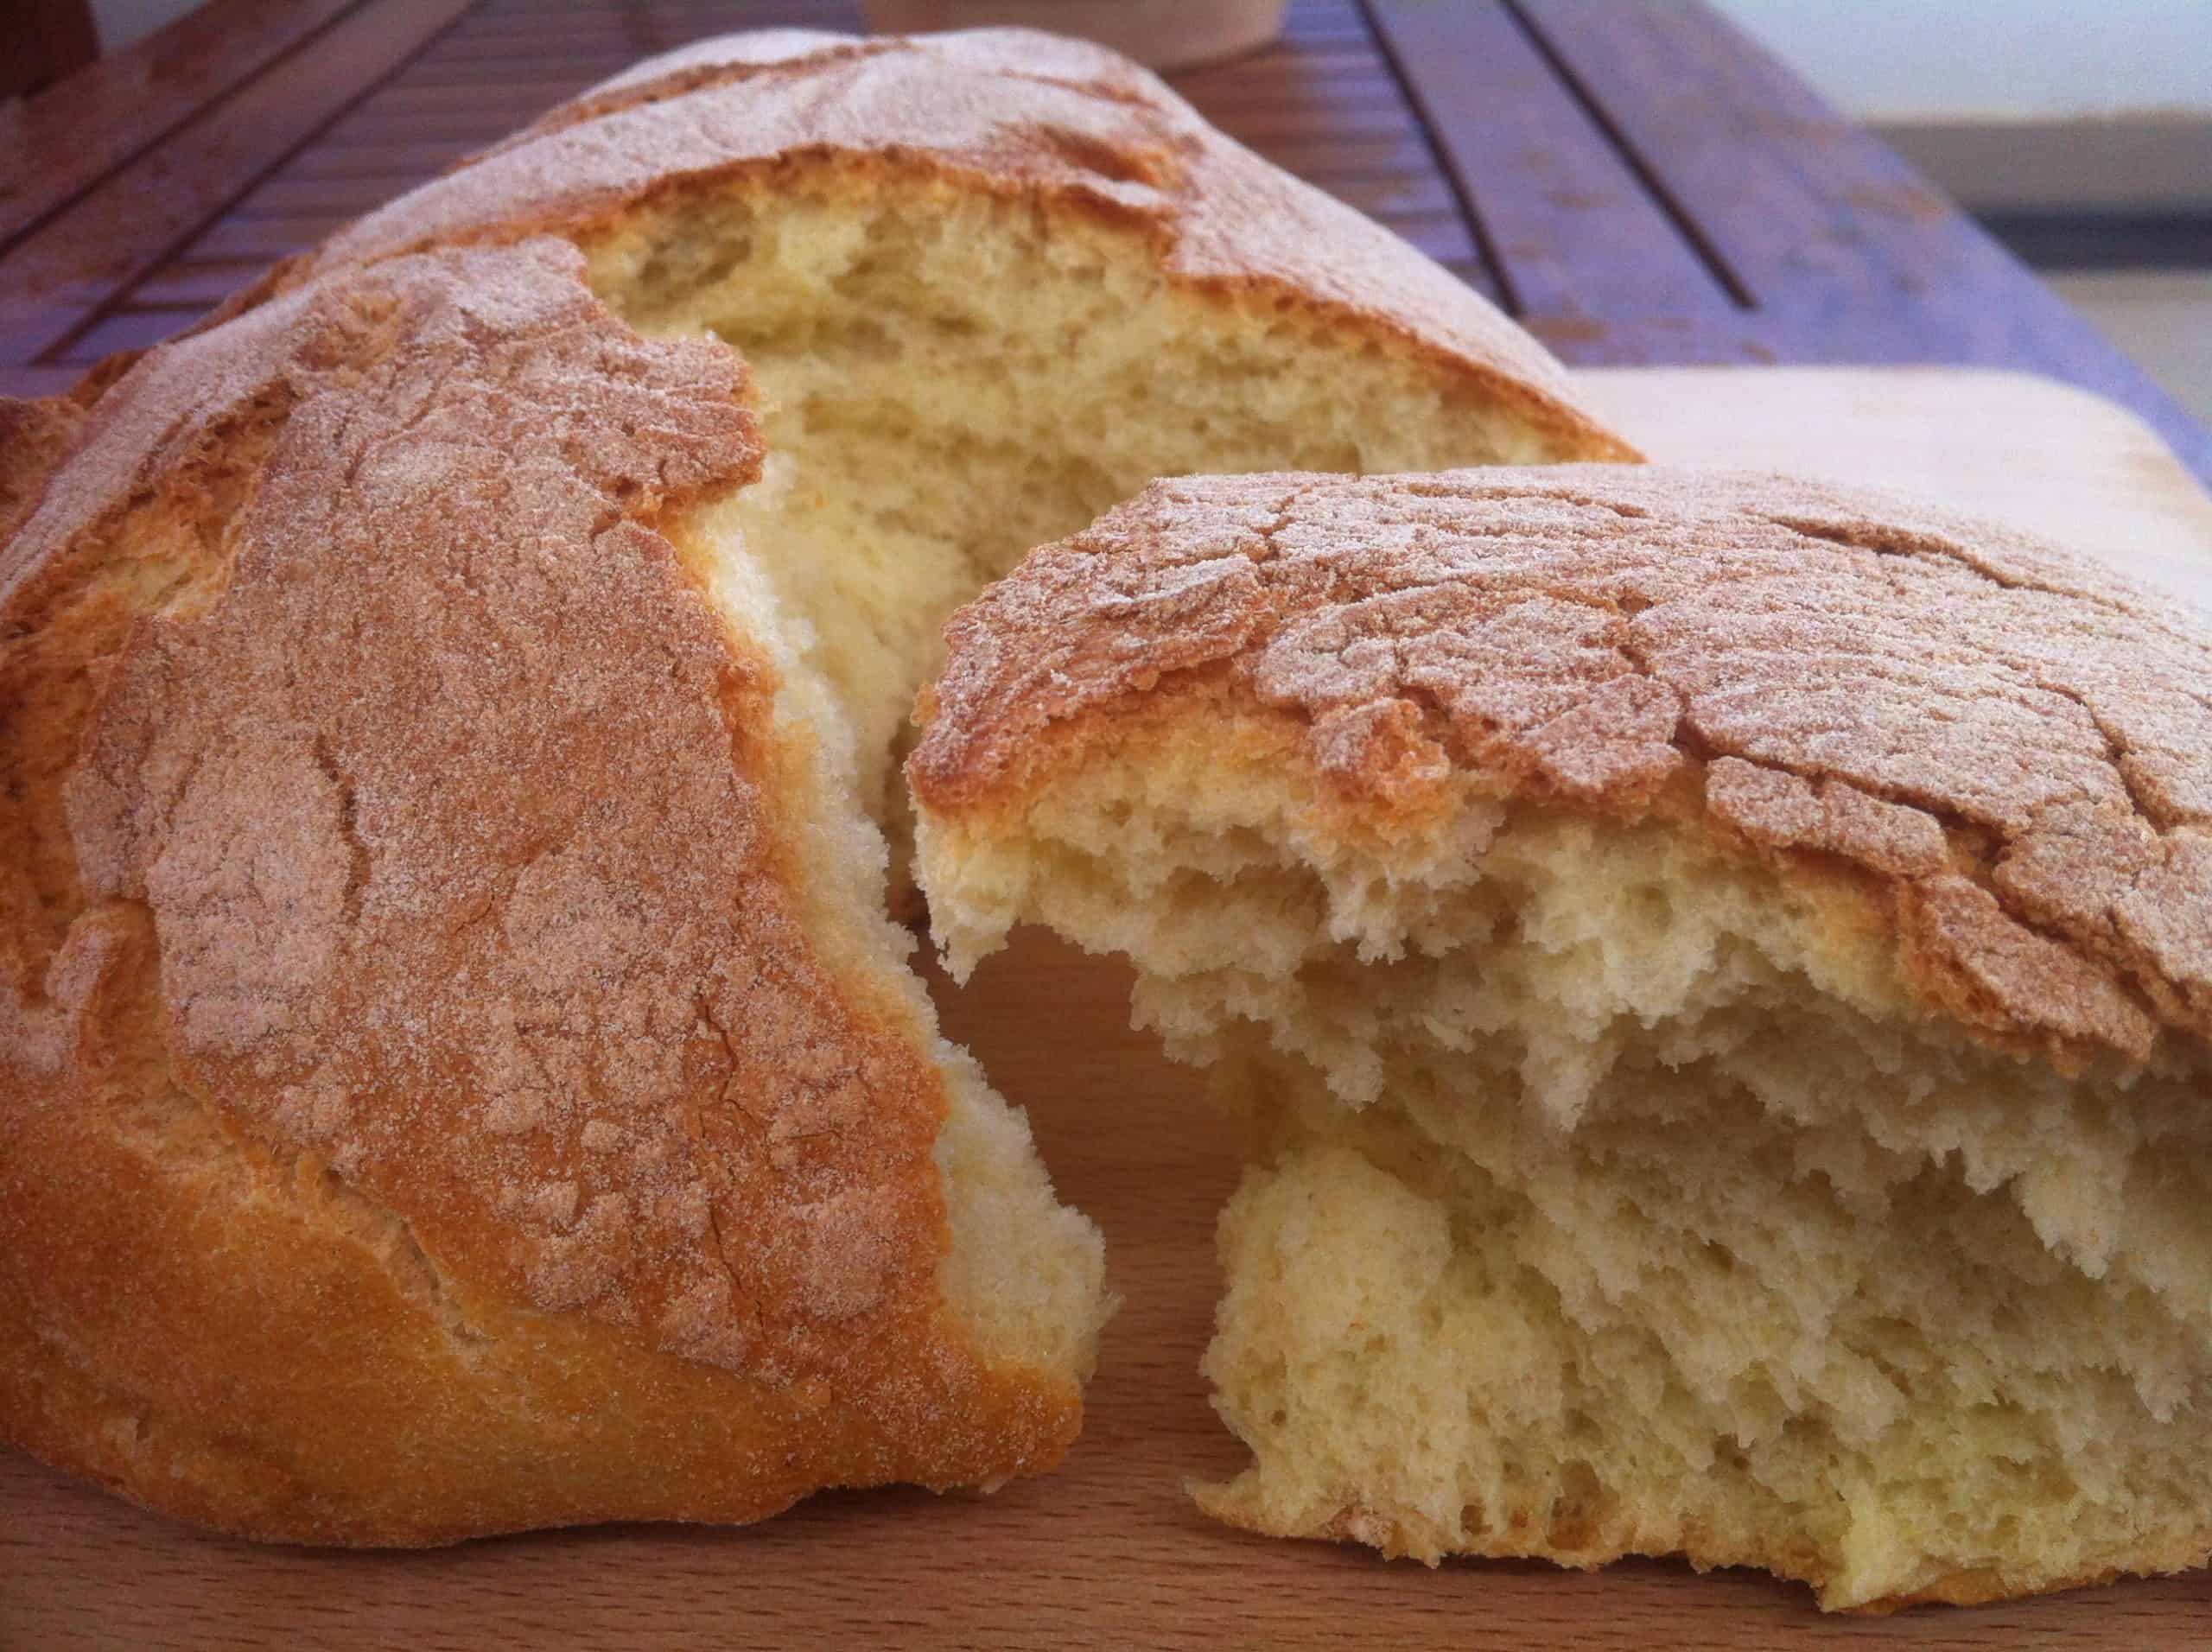 making-bread-with-self-raising-flour-offer-cheap-save-66-jlcatj-gob-mx